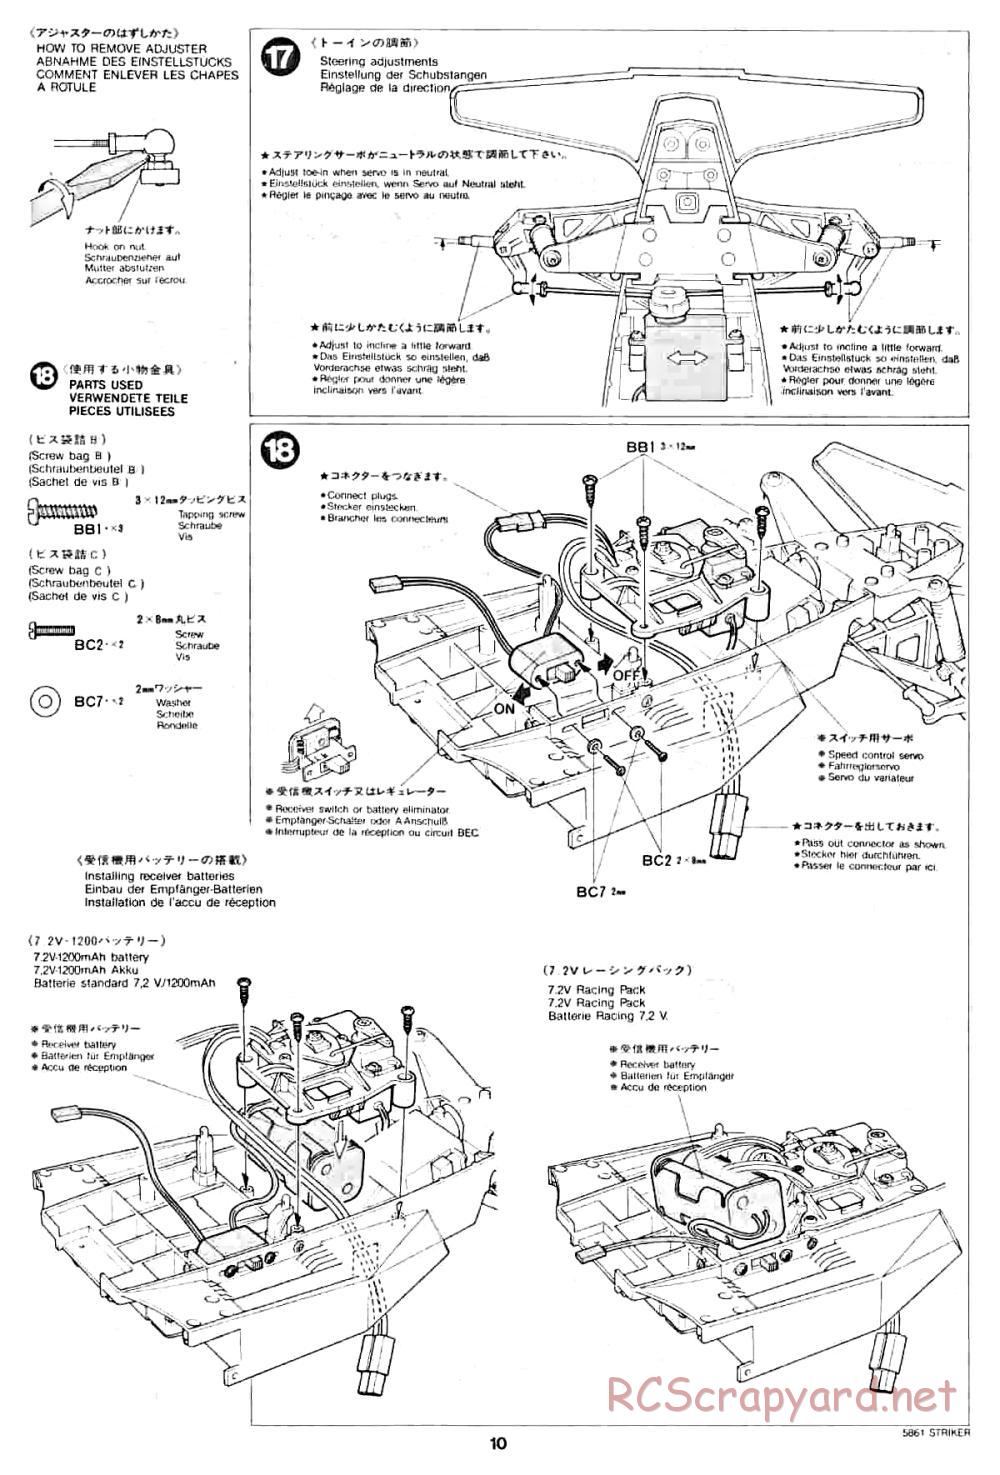 Tamiya - Striker - 58061 - Manual - Page 10